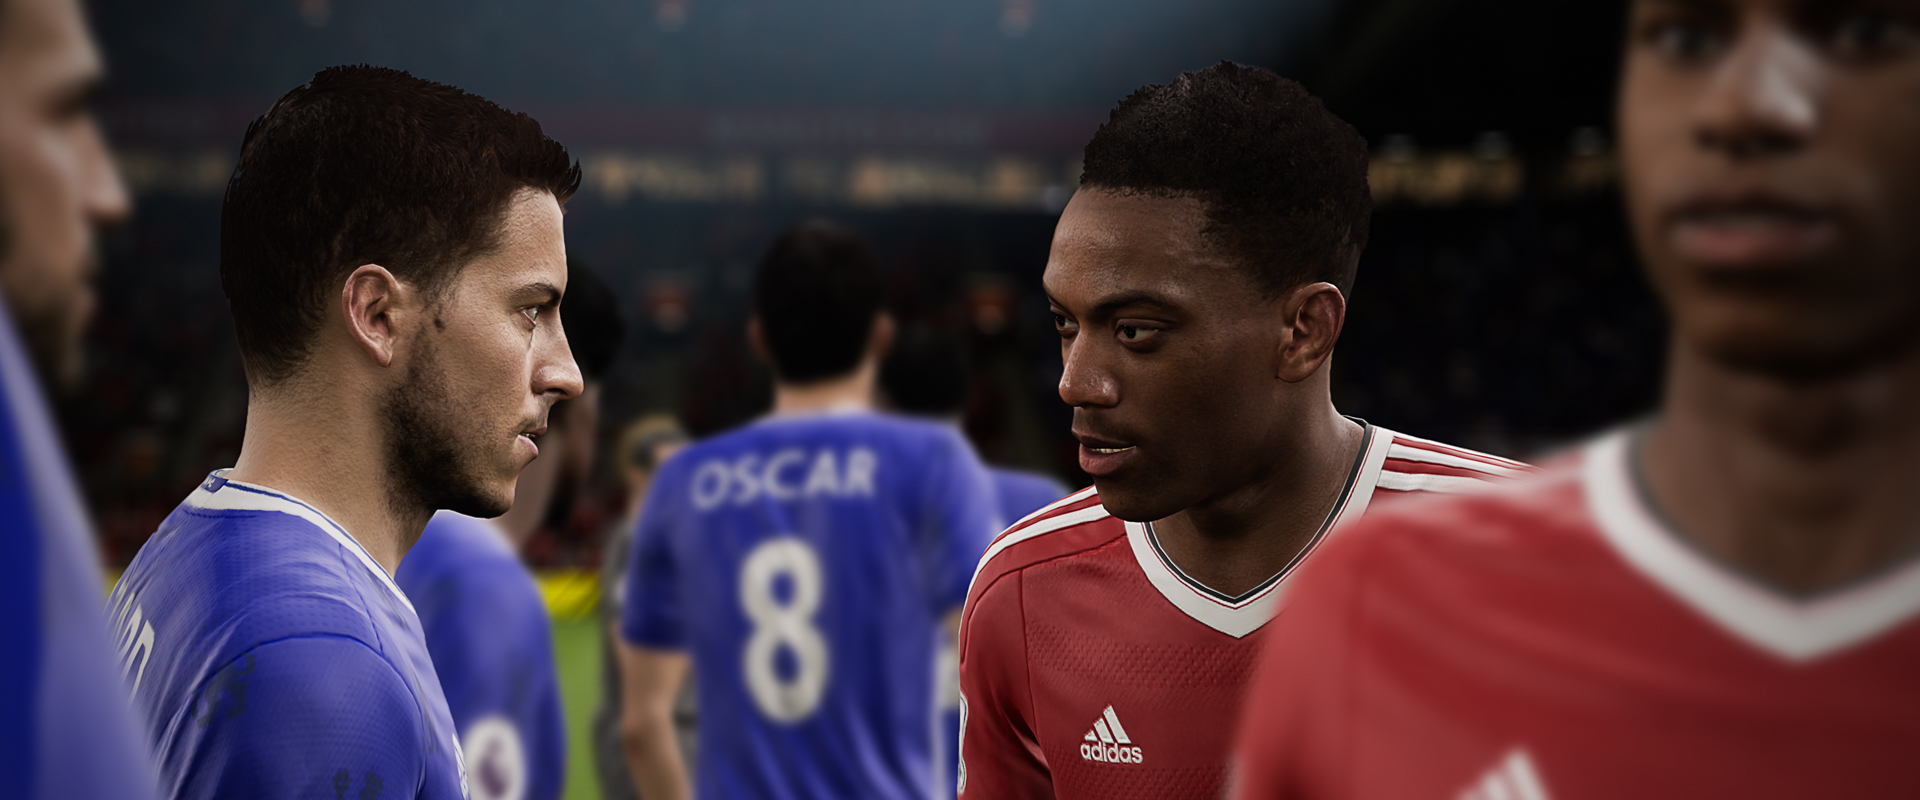 FIFA 17: Őszi kupasorozat is indul!